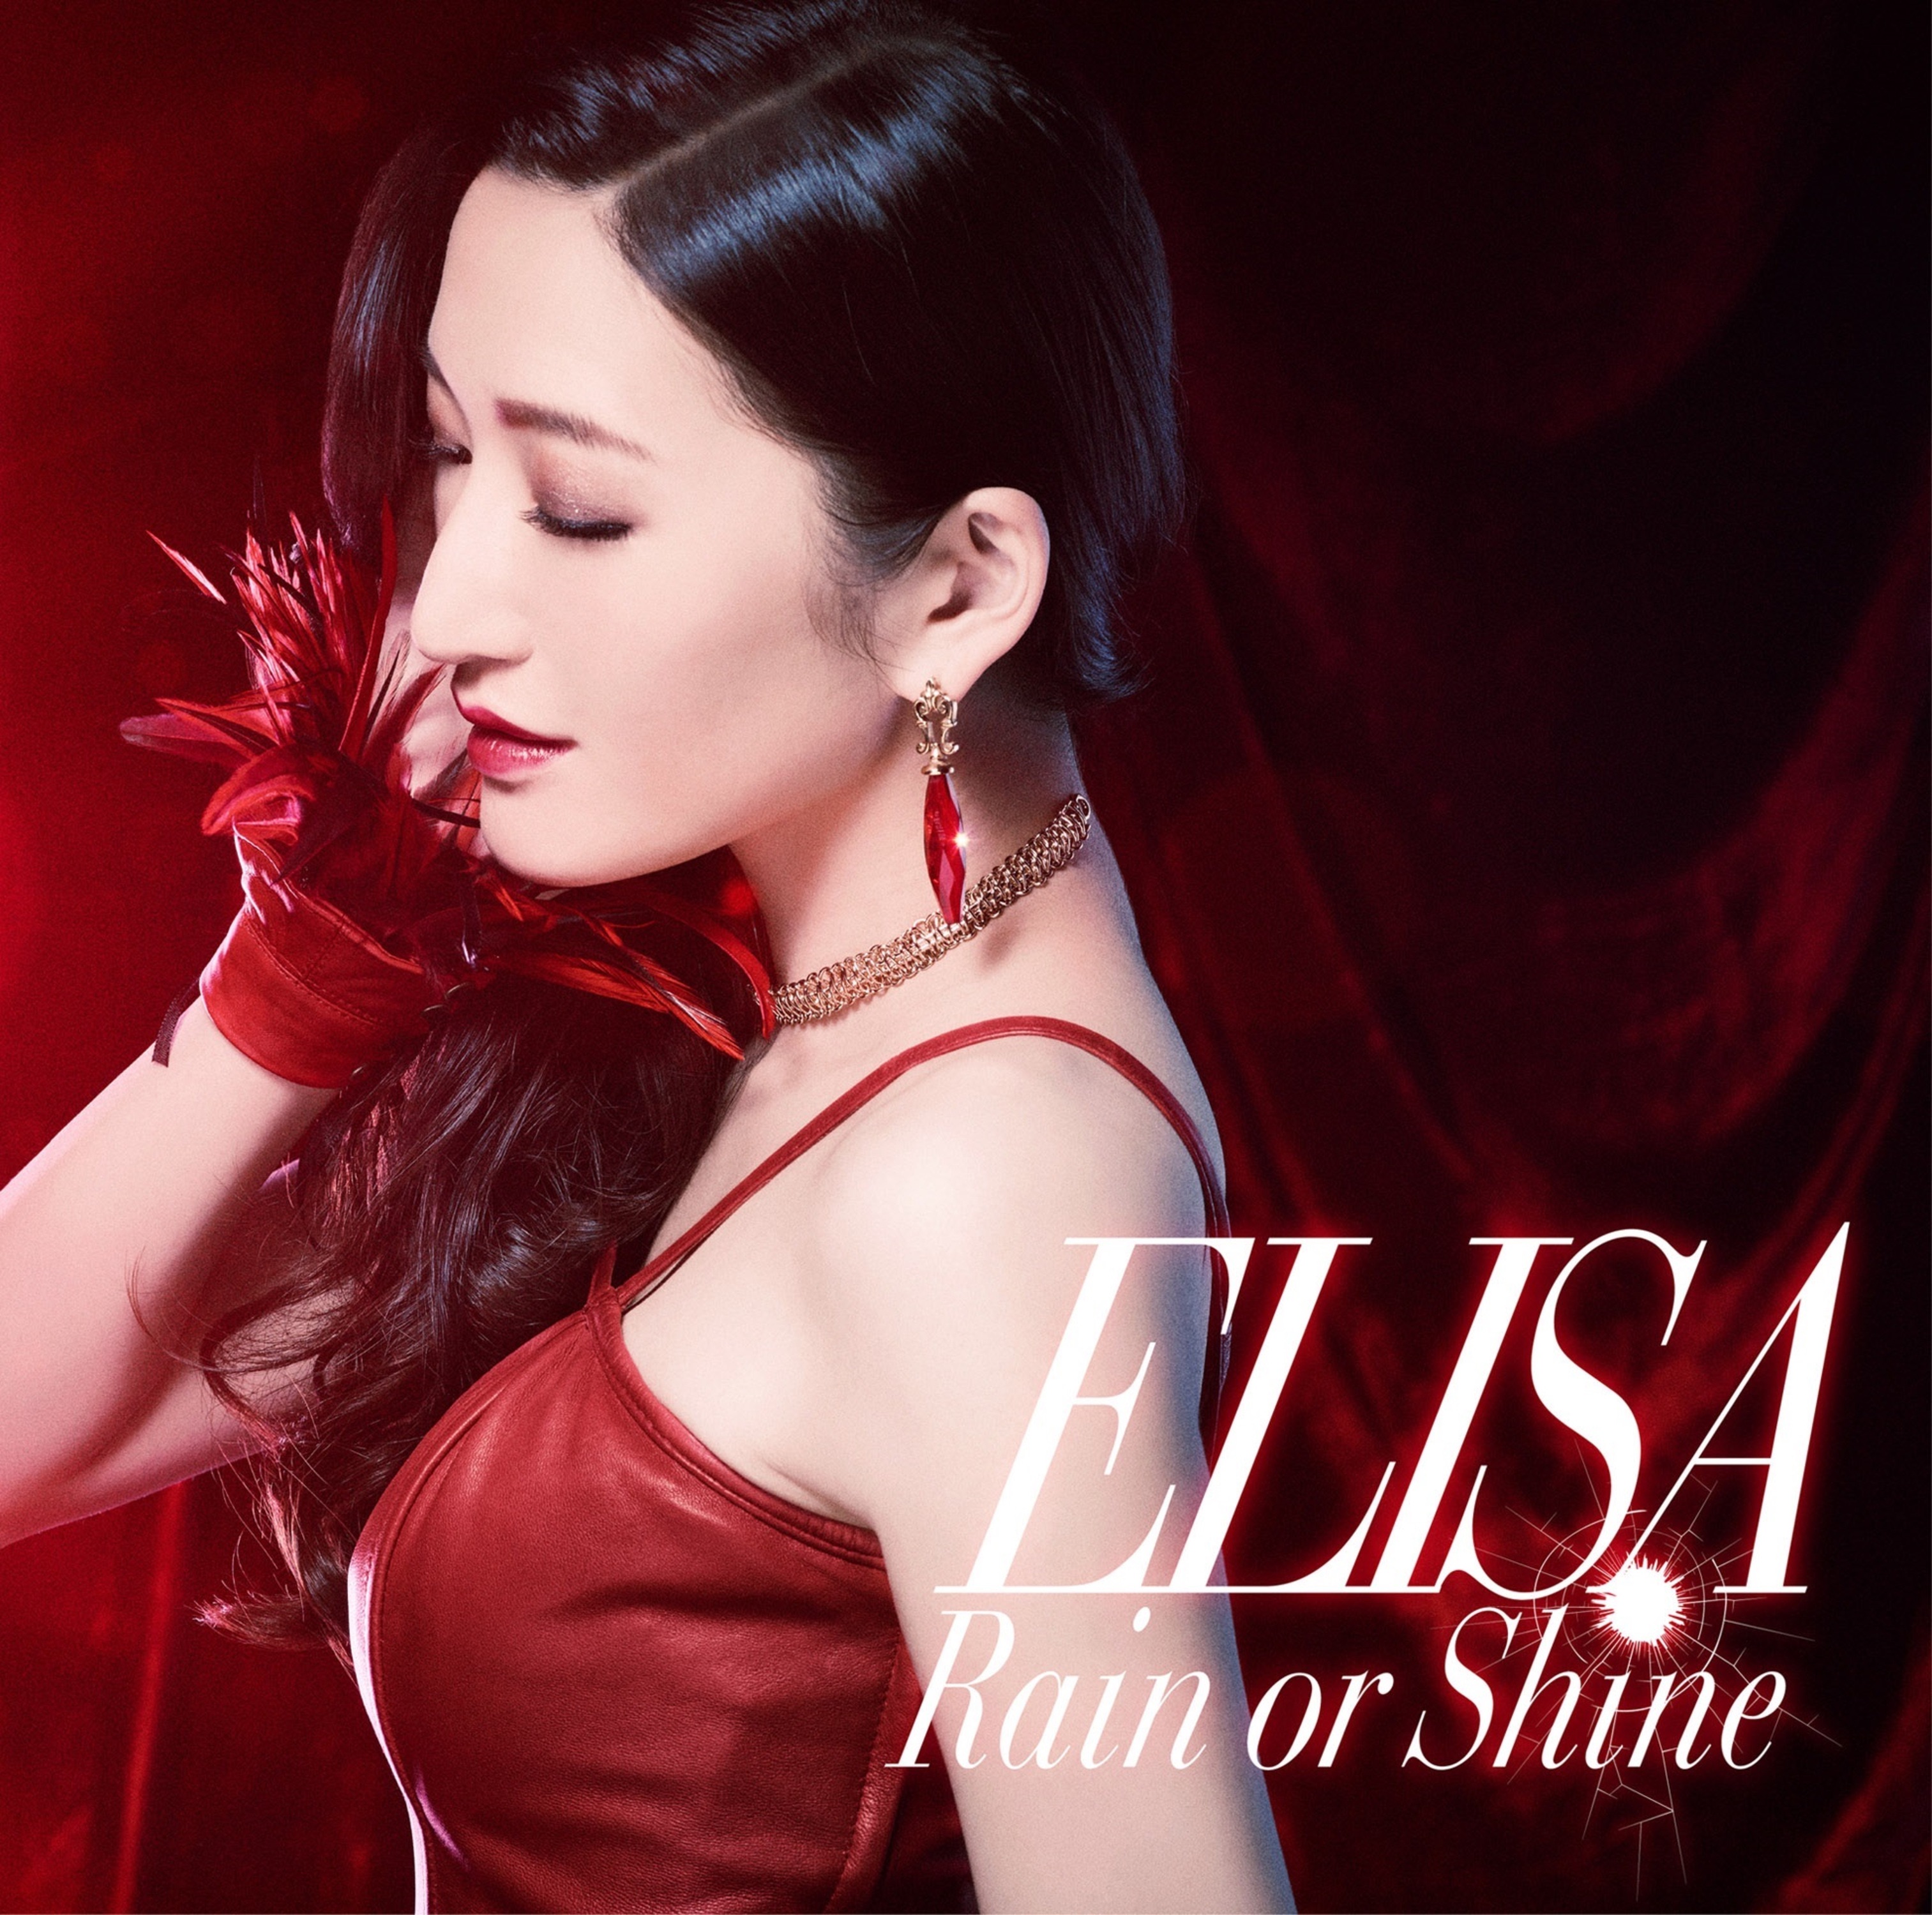 Rain or shine. Elisa CD. Музыка к Элизе.